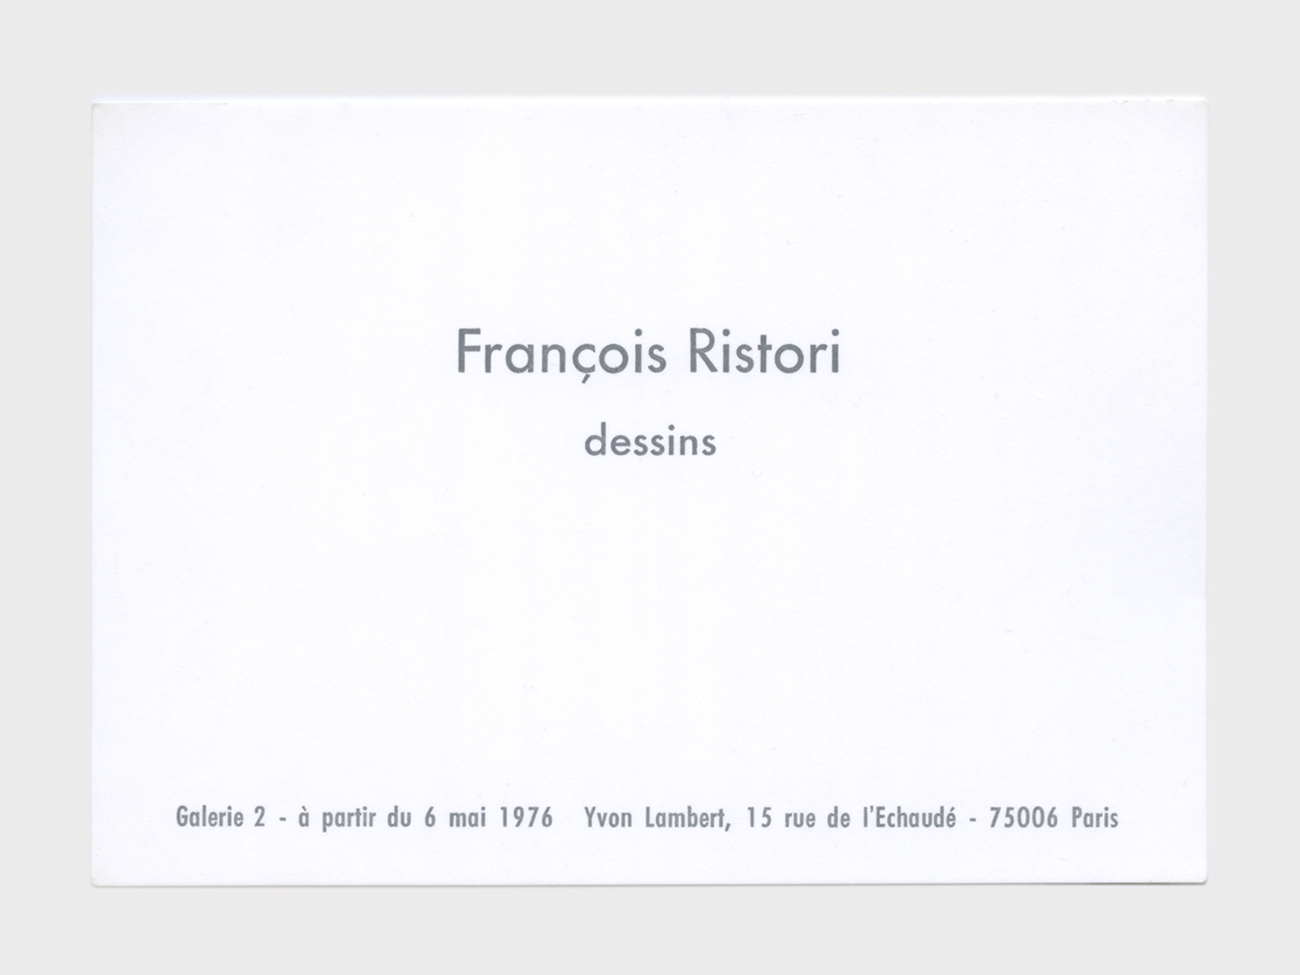 francois-ristori-exposition-yvon-lambert-1976-dessins-carton